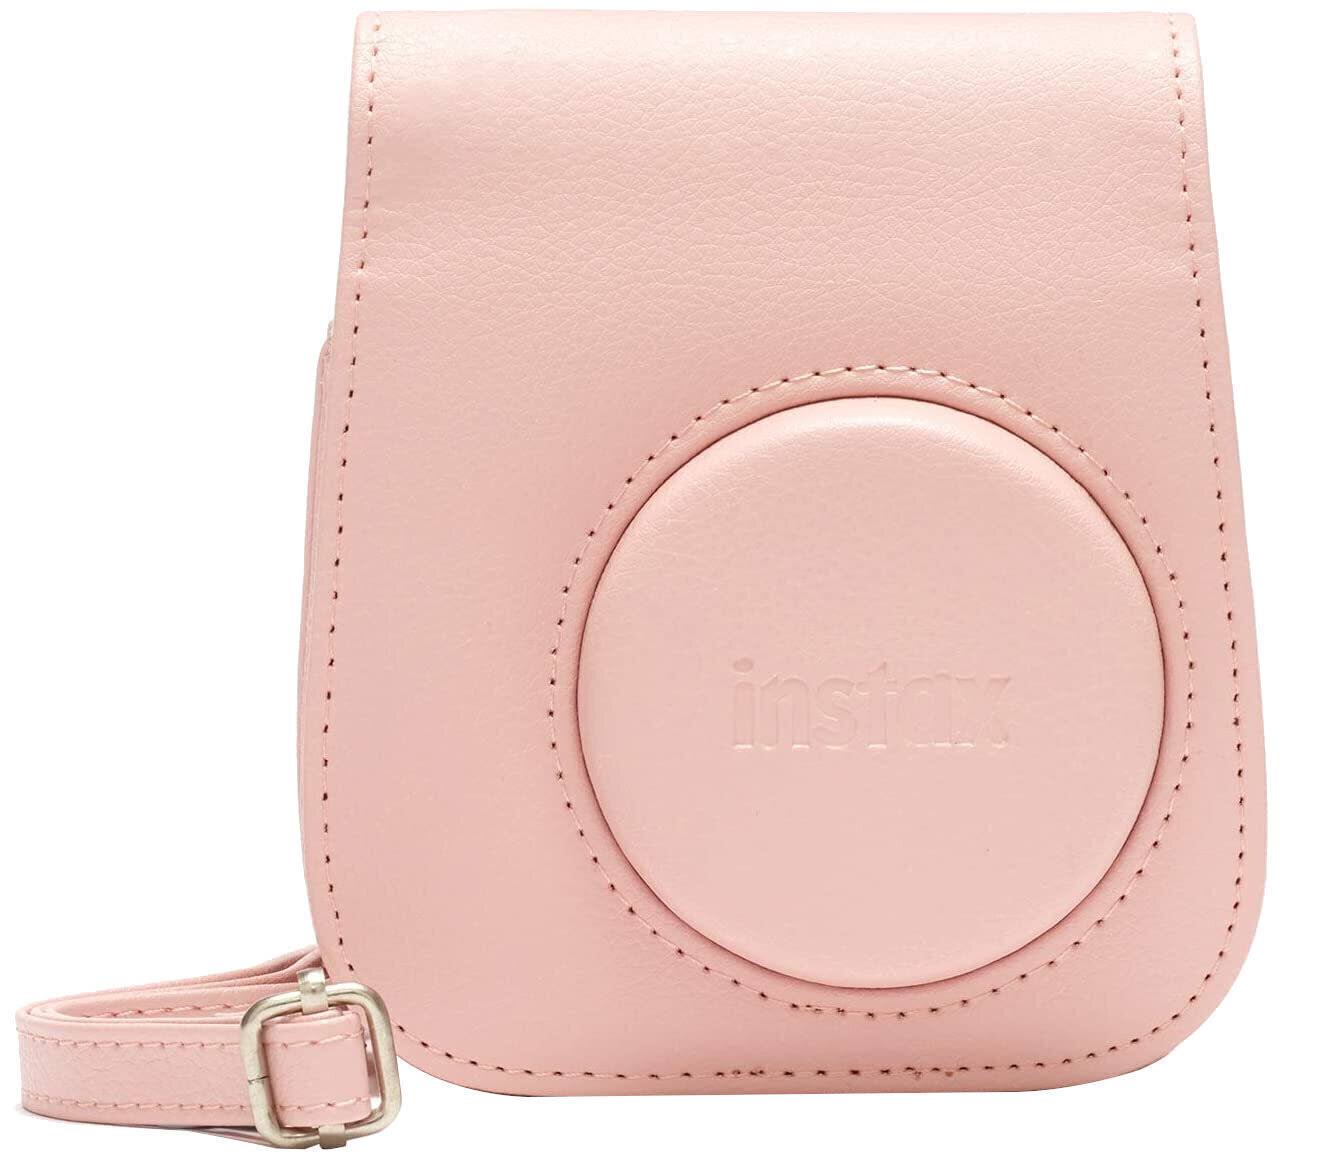 INSTAX Mini 11 Case - Blush Pink